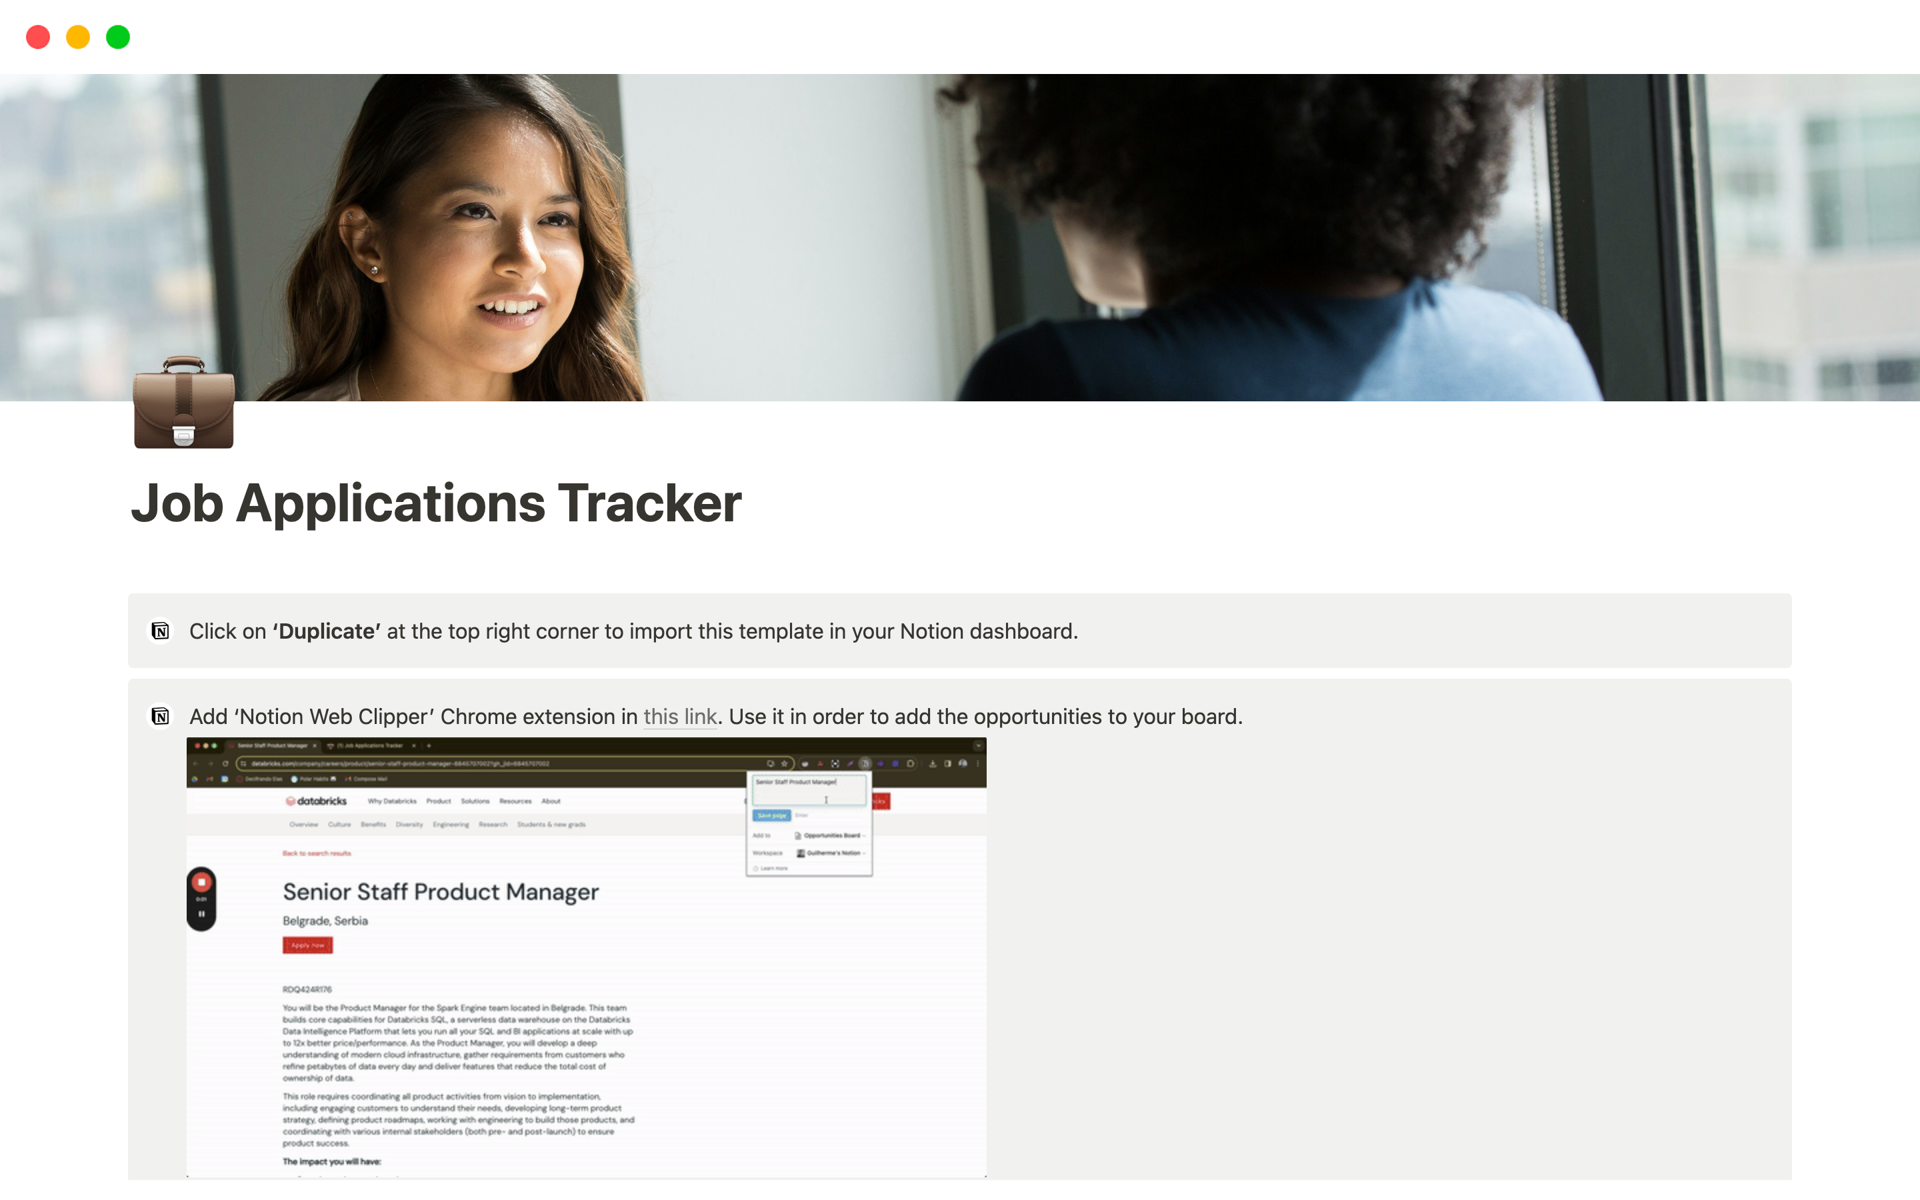 Aperçu du modèle de Job Applications Tracker